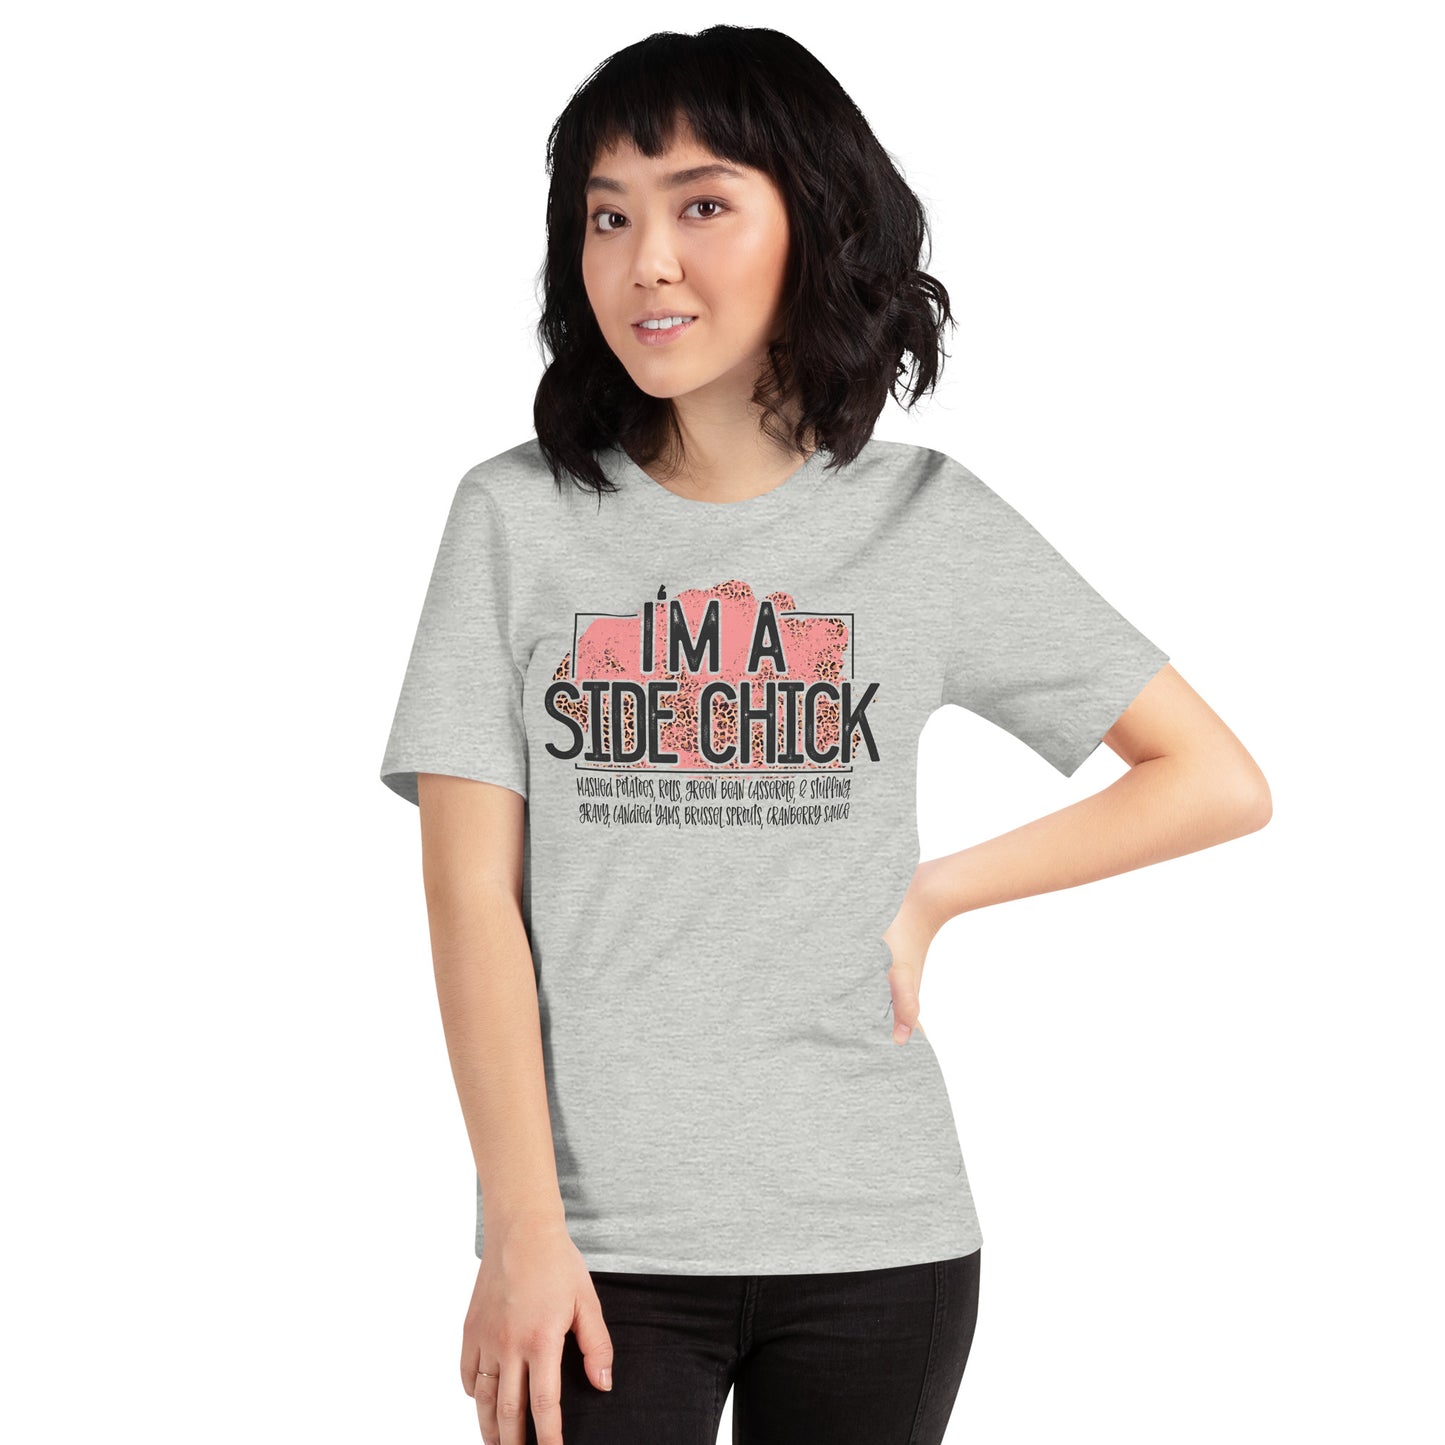 "Side Chick" T-shirt